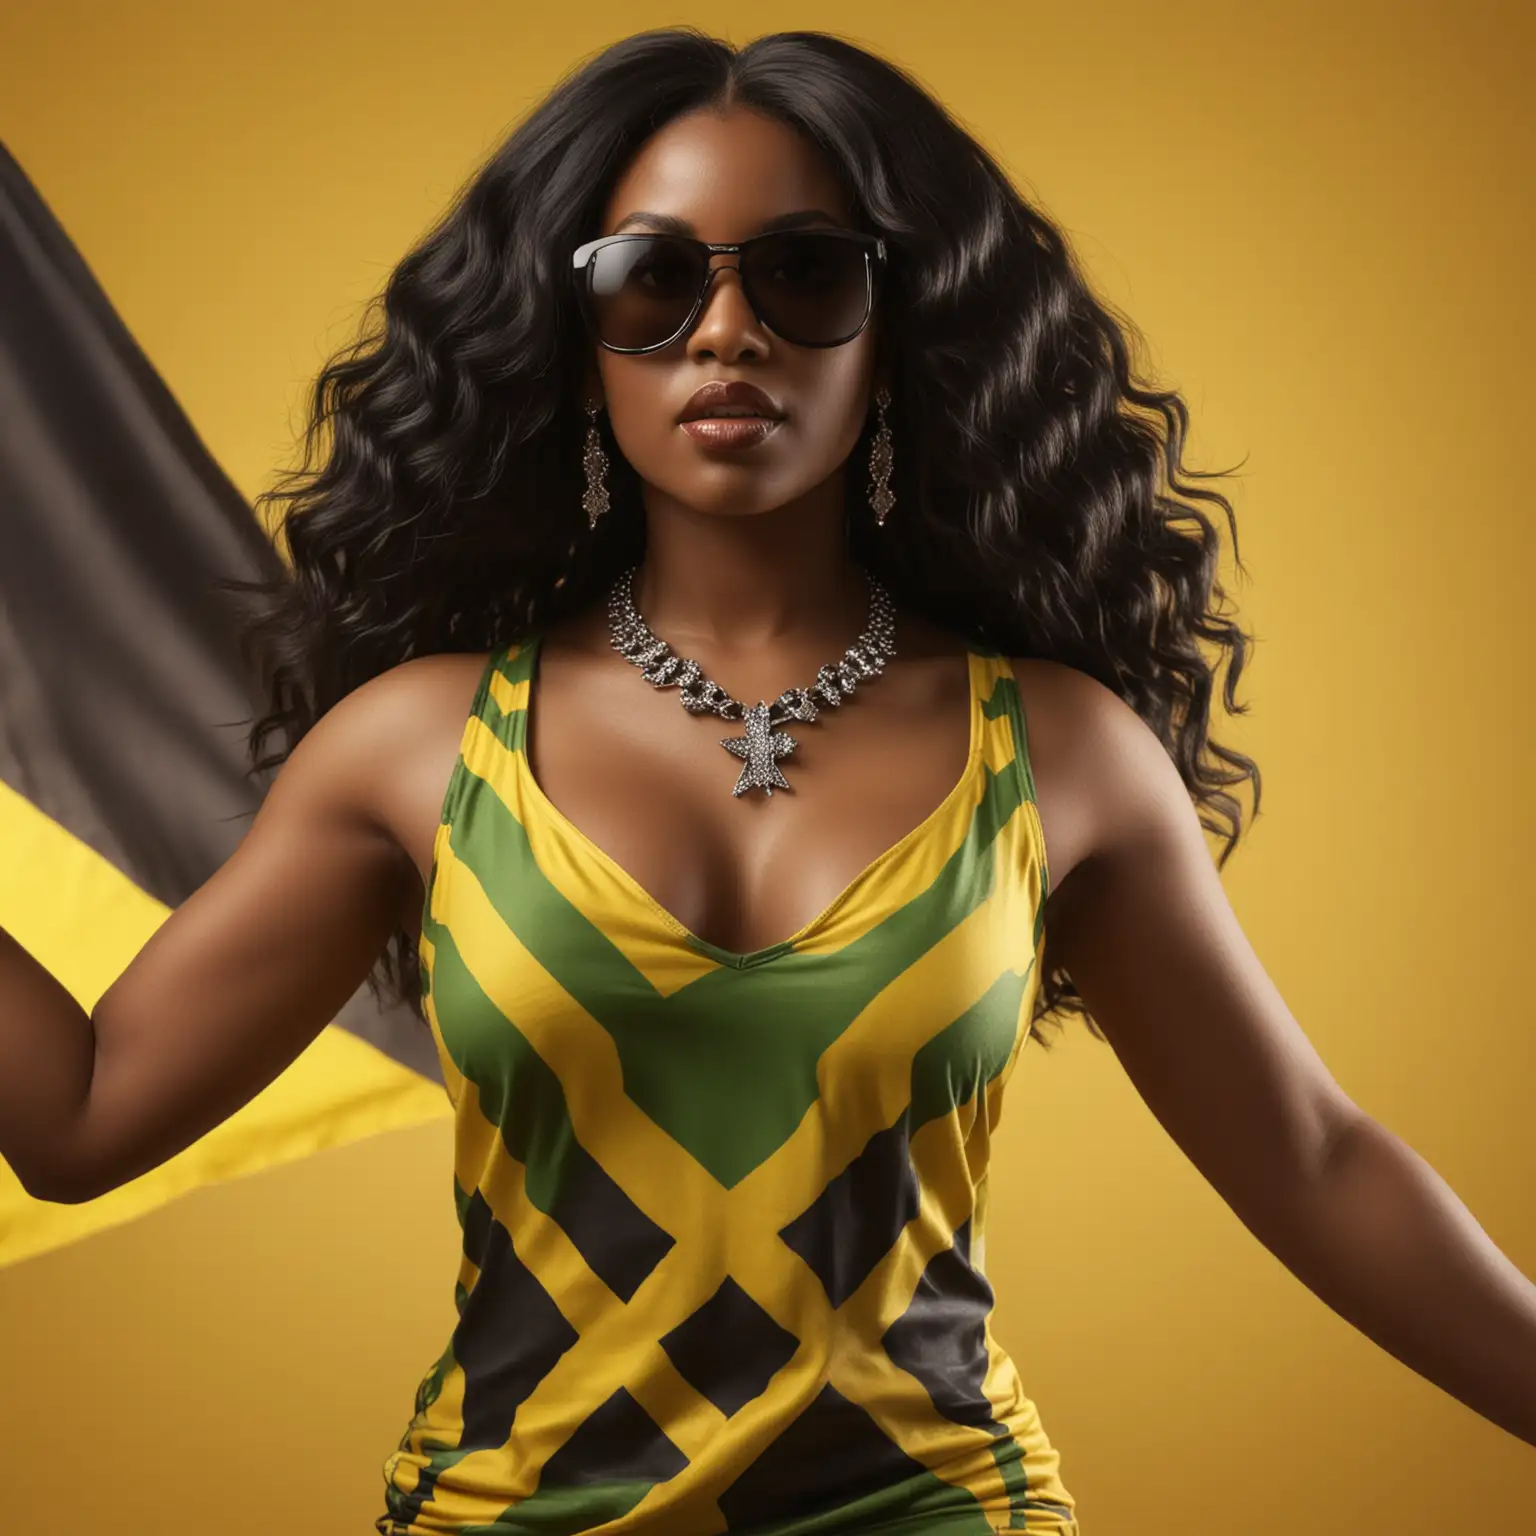 Vibrant Jamaican Flag Dress Stylish Black Woman Dancing in Cinematic Lighting